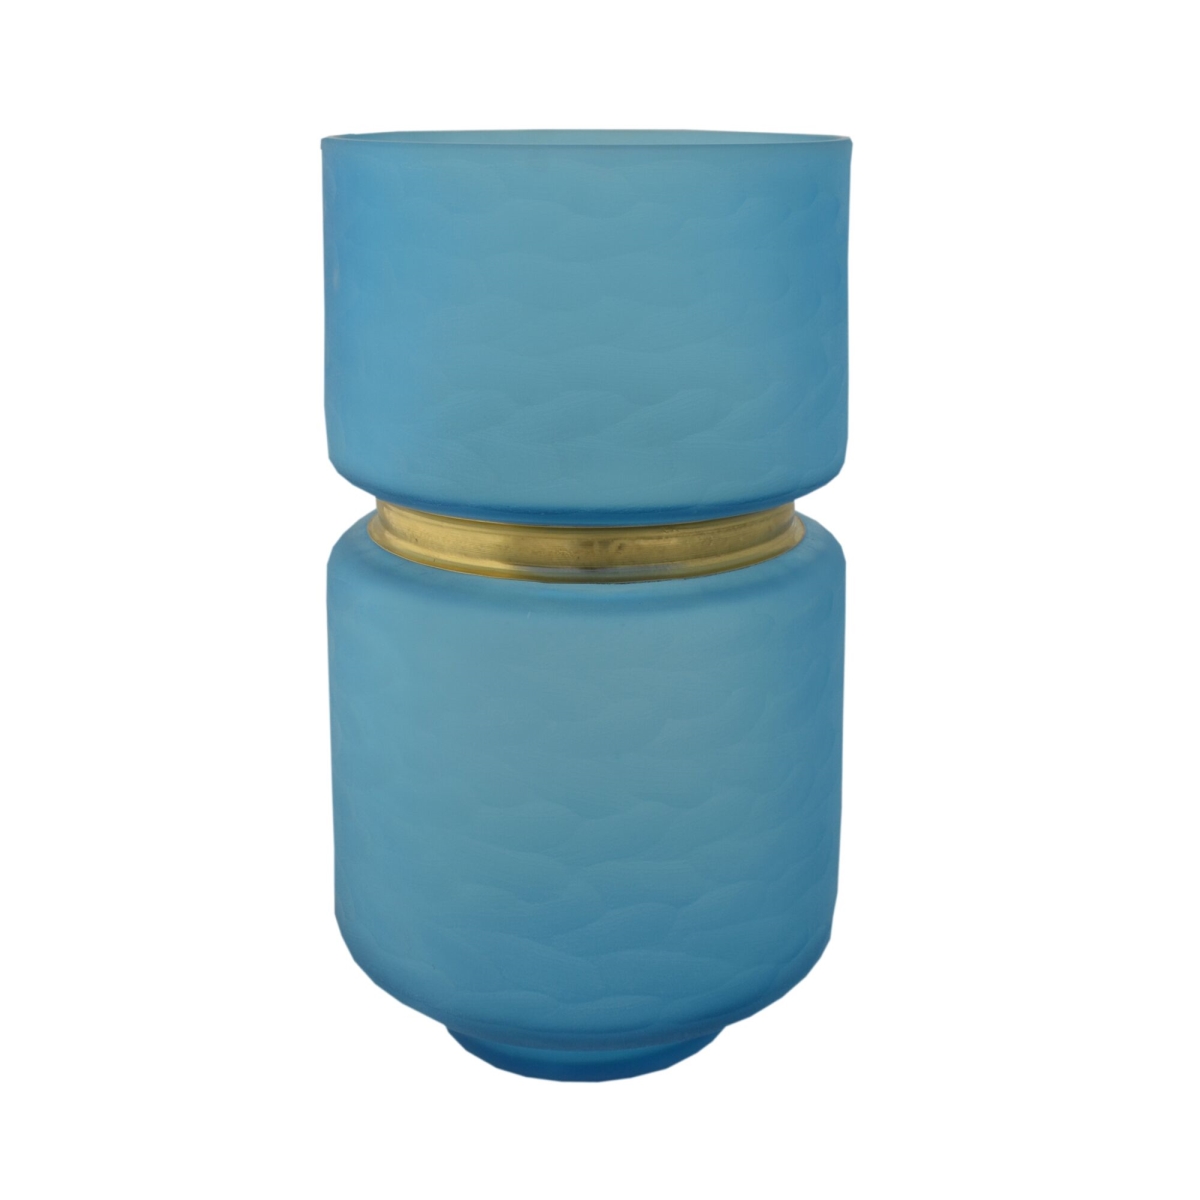 Wg-06b Leech Vase, Blue